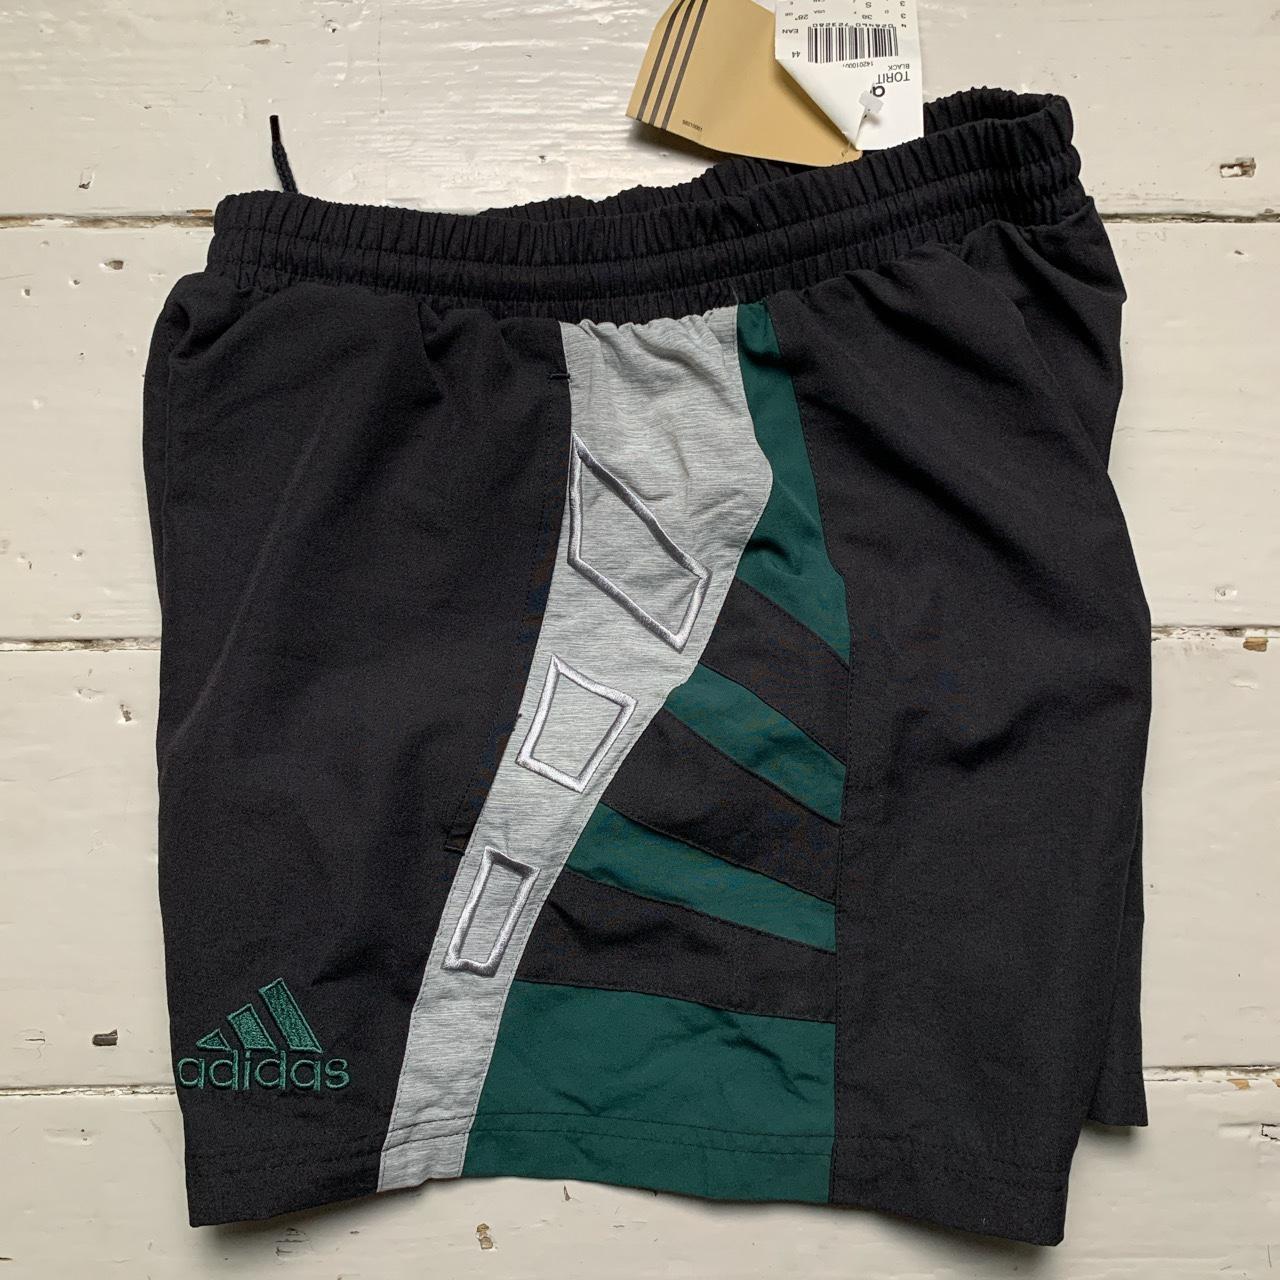 Adidas Vintage 90’s Shell Trackpant Shorts Black Grey and Green